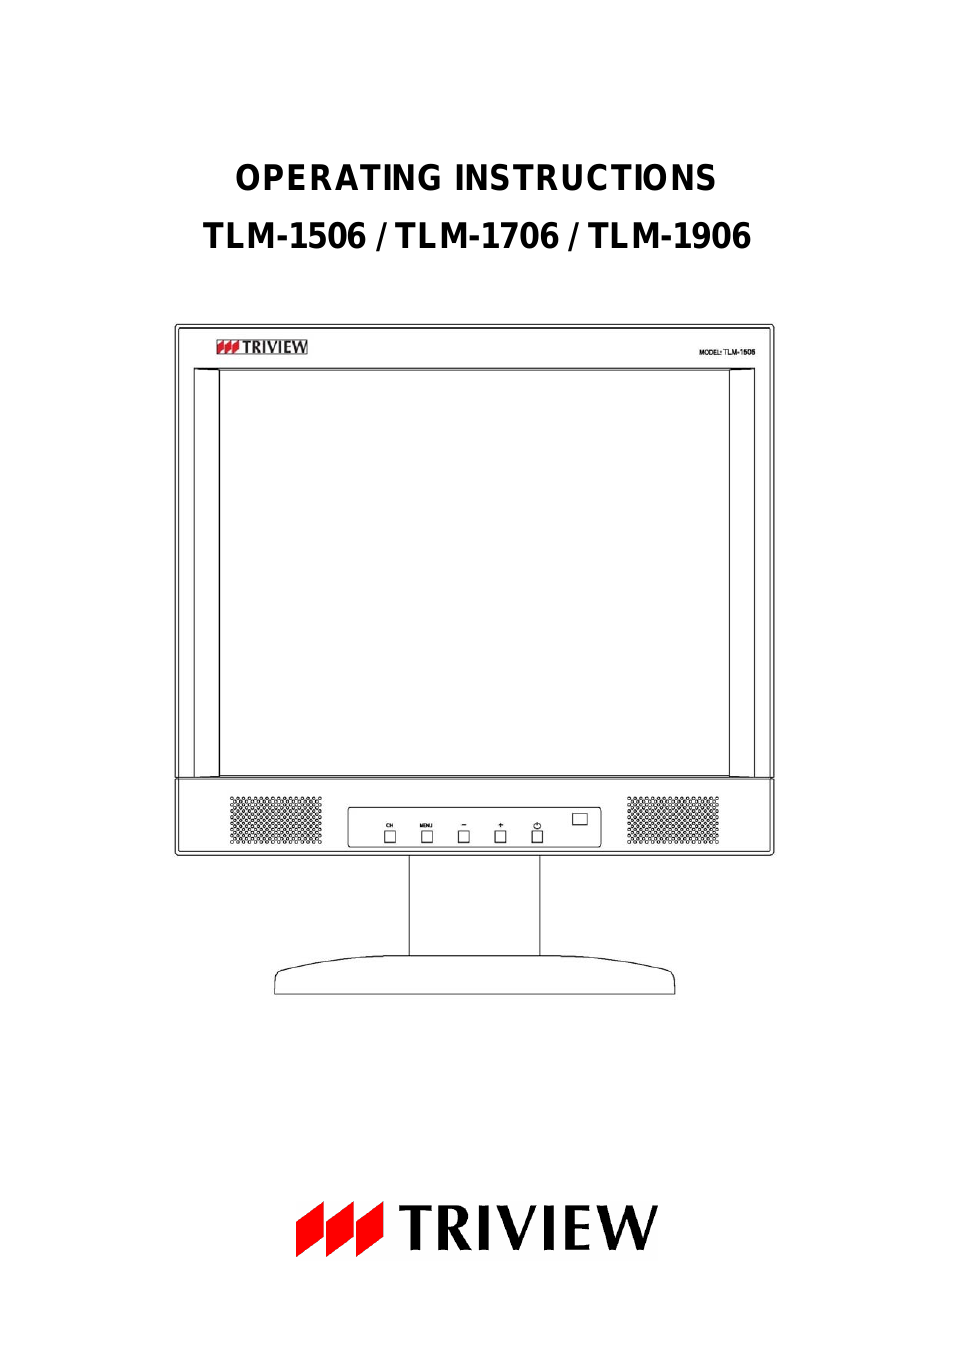 TLM-1706